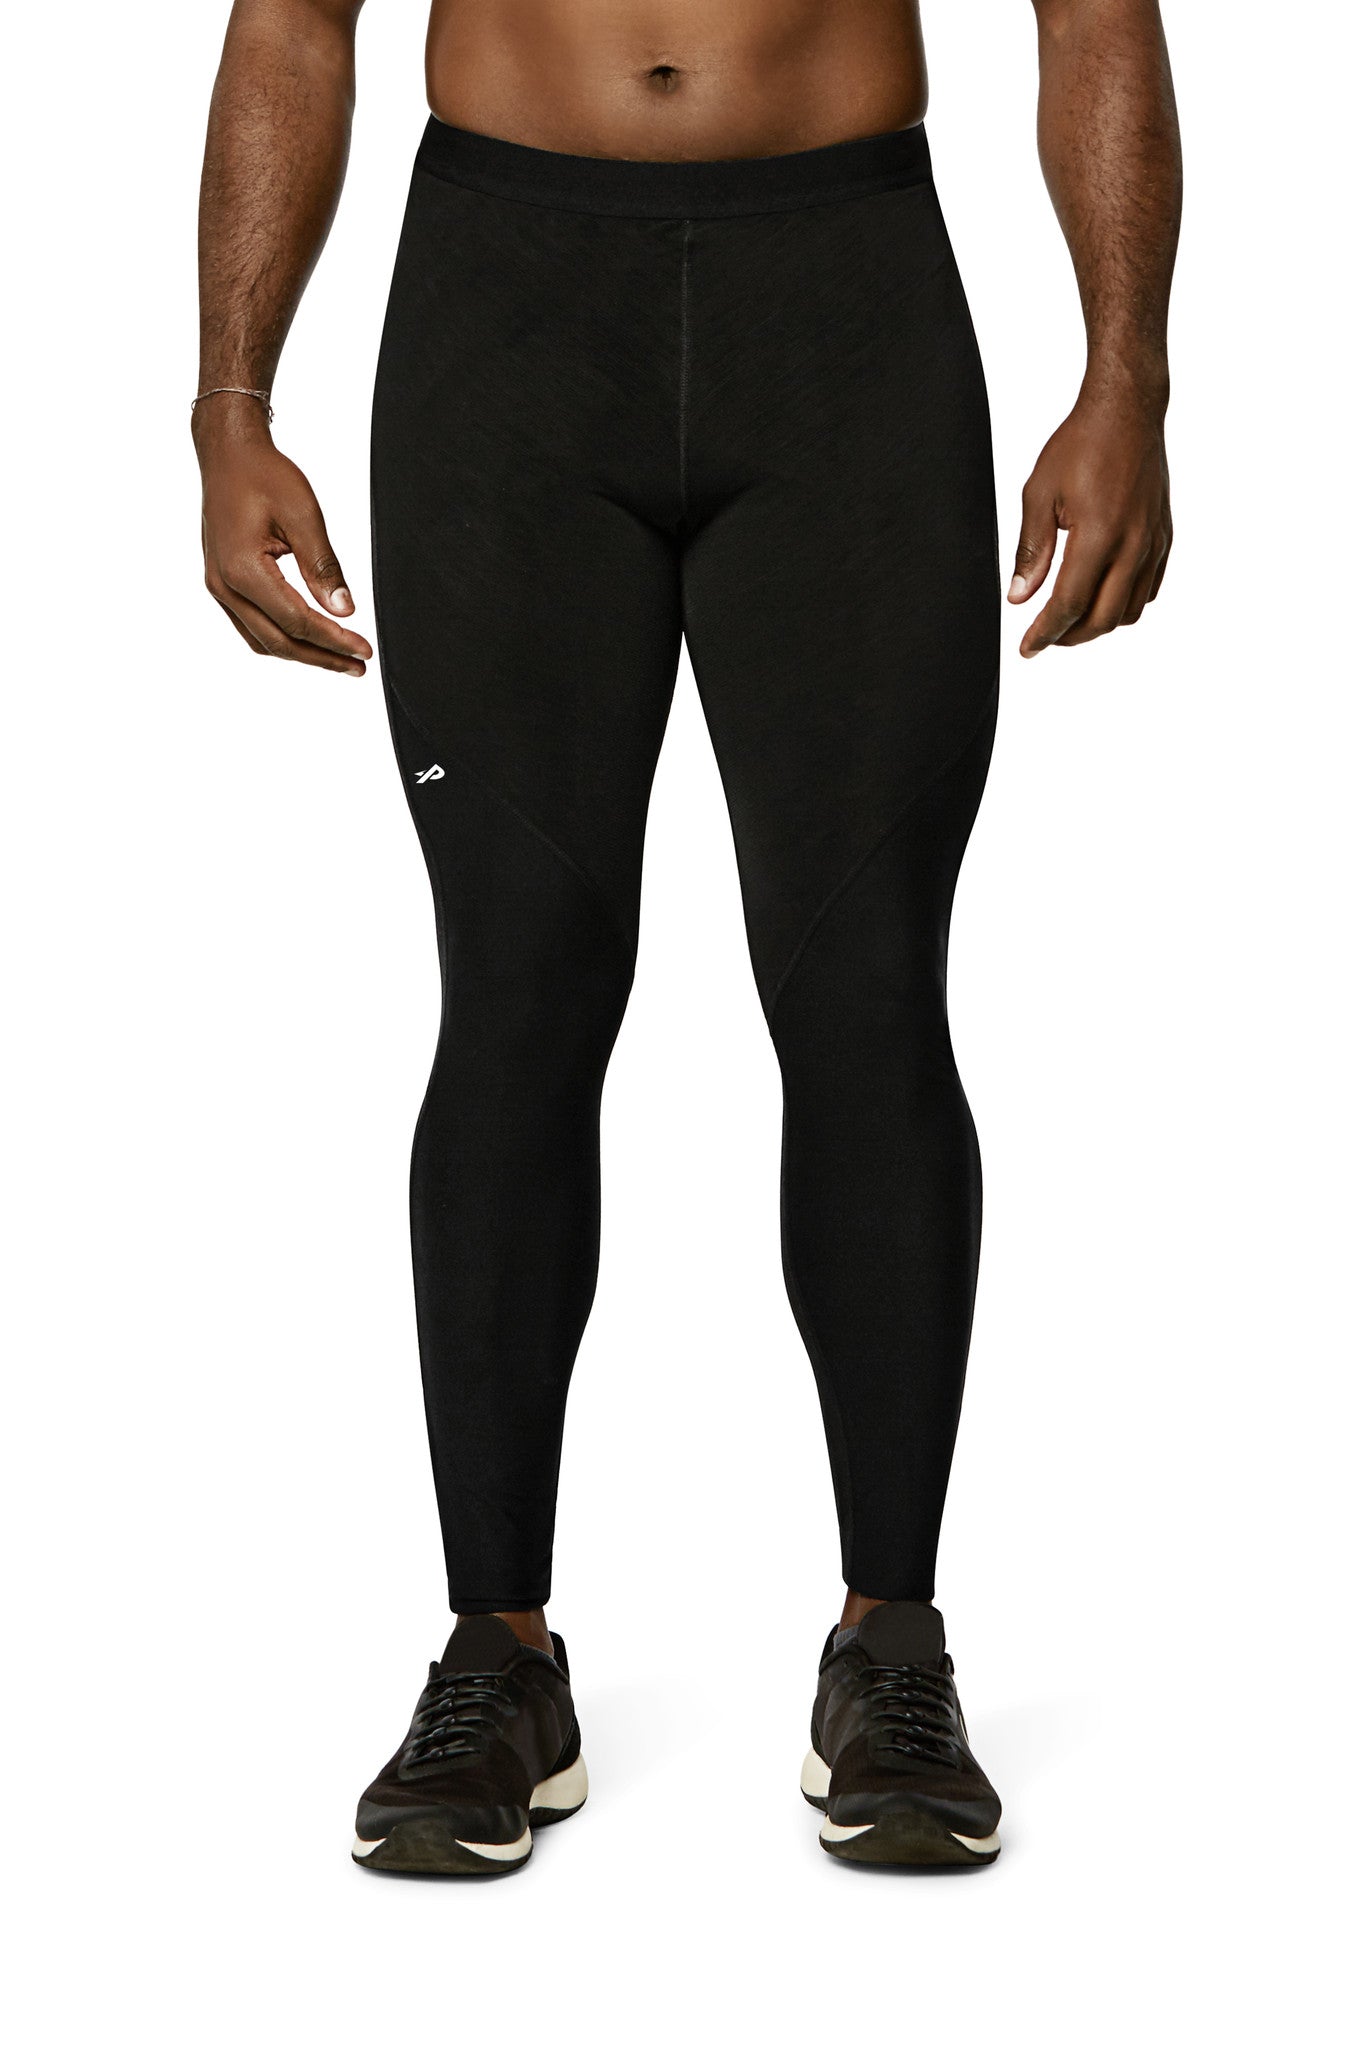 Pro Resistance Shorts for Men - Black – Physiclo